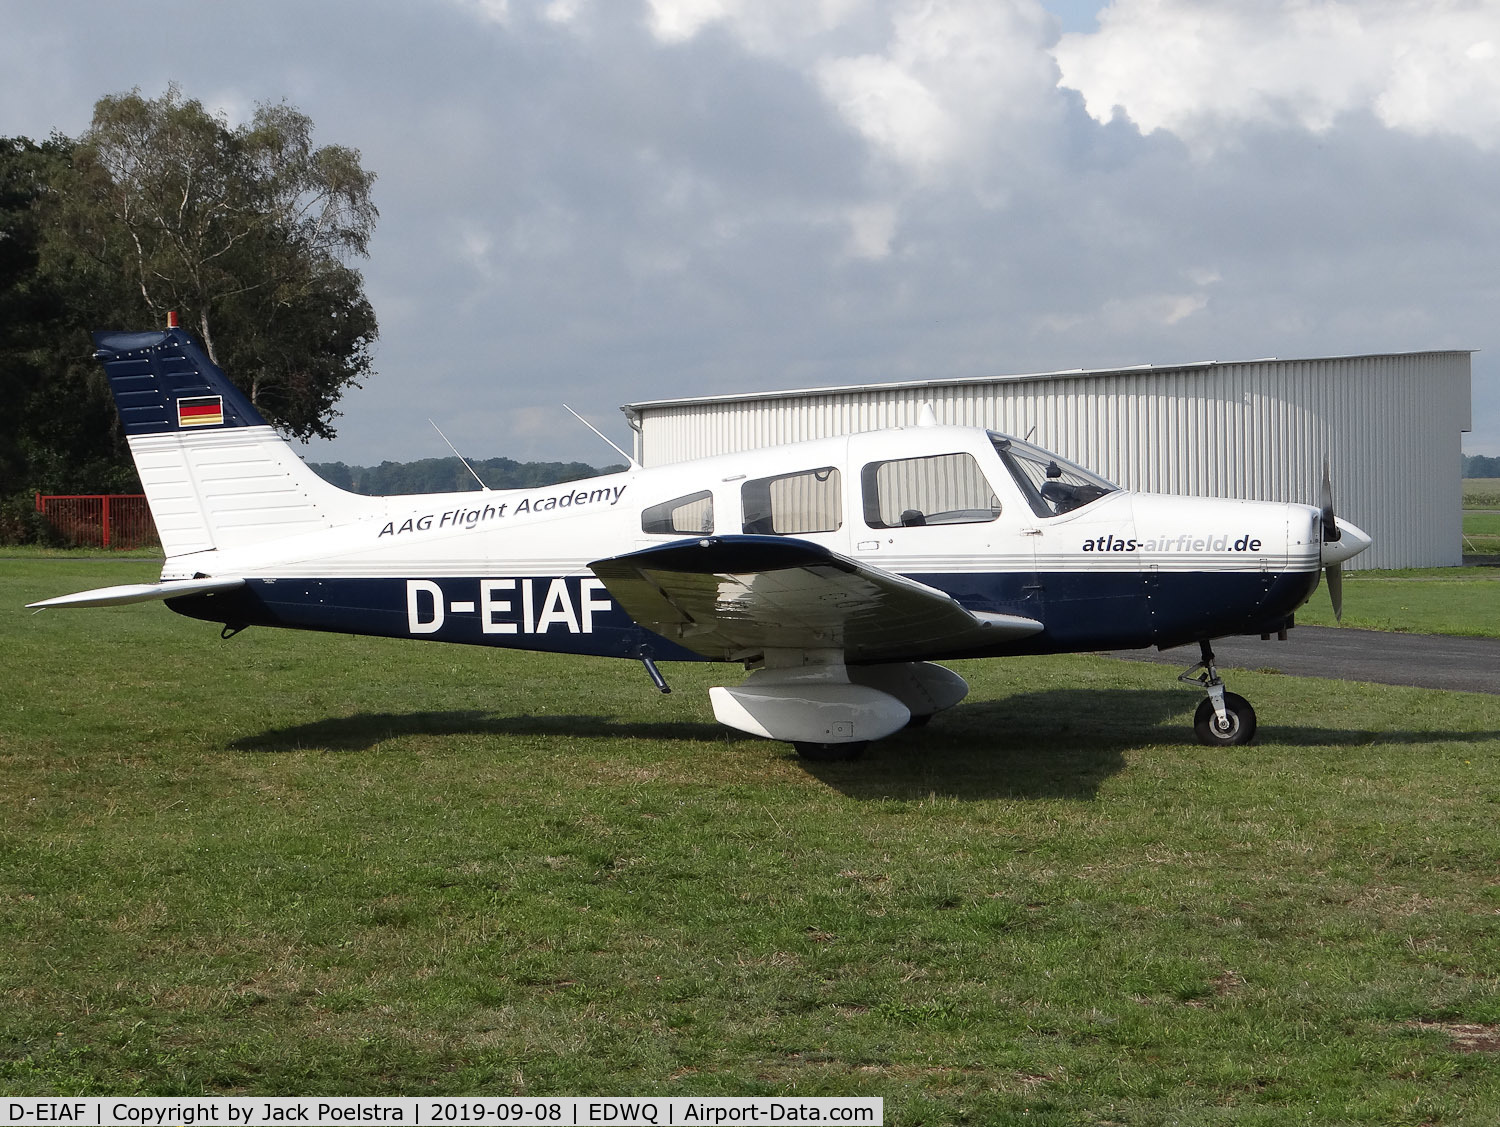 D-EIAF, 1978 Piper PA-28-161 Warrior II C/N 28-7816424, D-EIAF of AAG Flight Academy at Gandersee airport